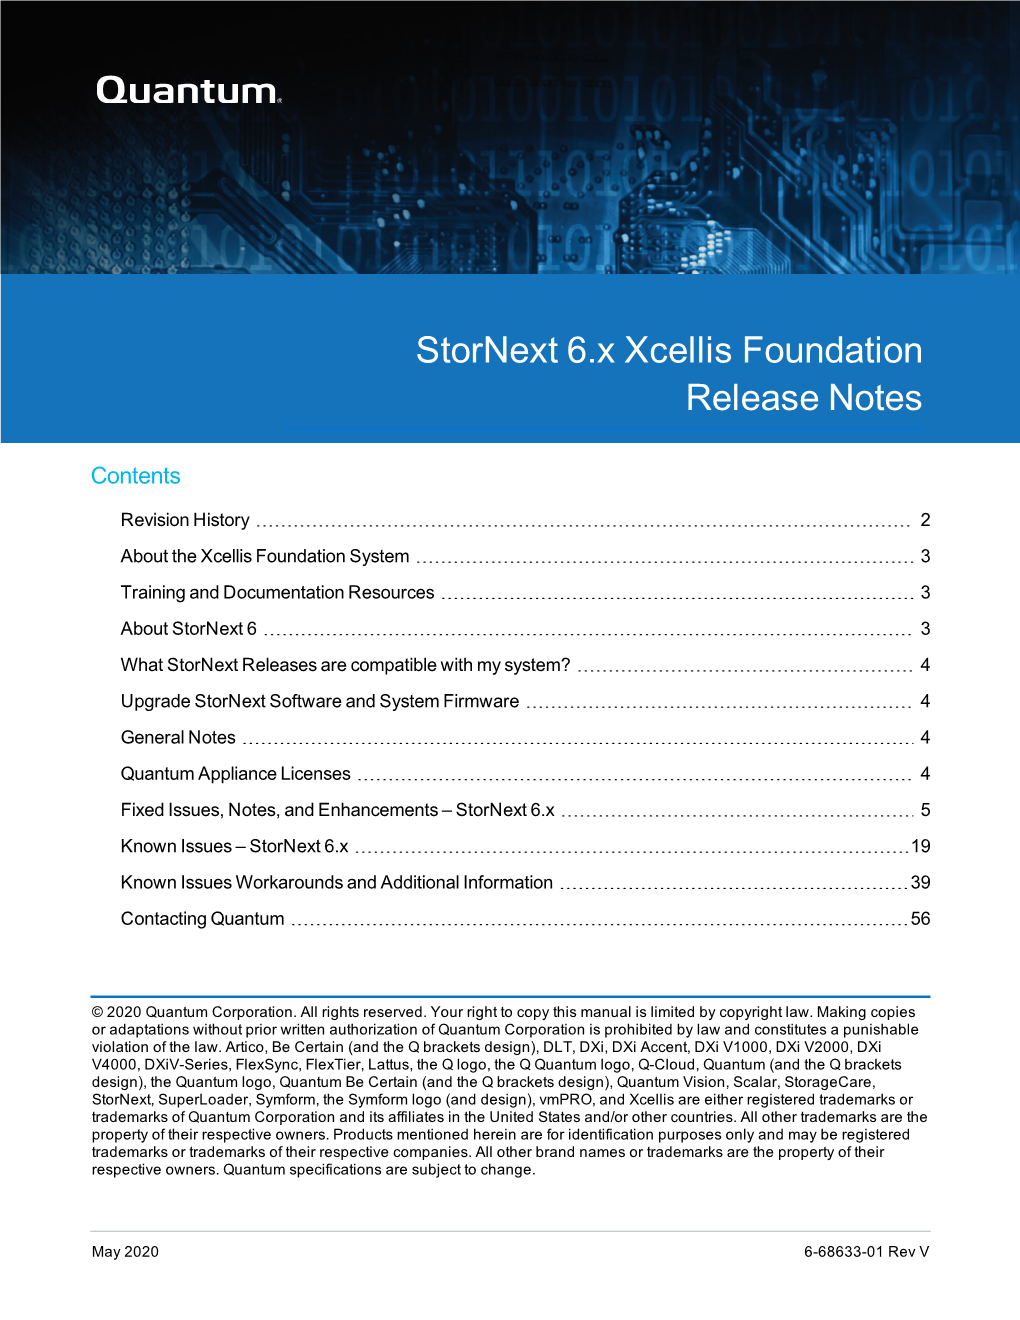 6-68633-01 Rev V Stornext 6.X Xcellis Foundation Release Notes